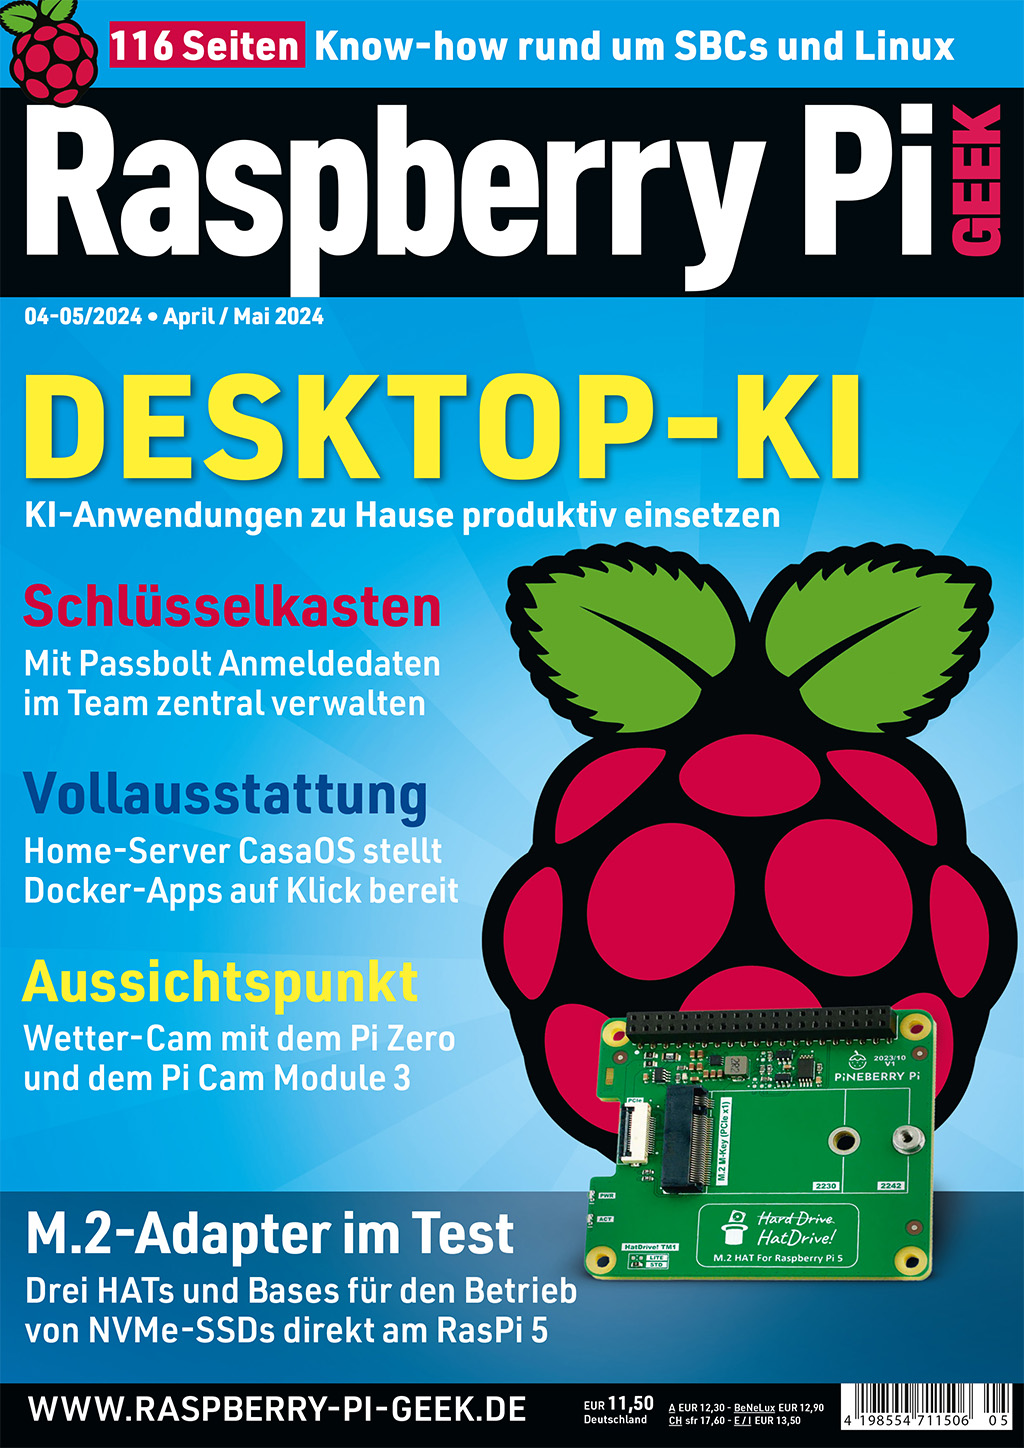 Raspberry Pi Geek Digital Jahresabo